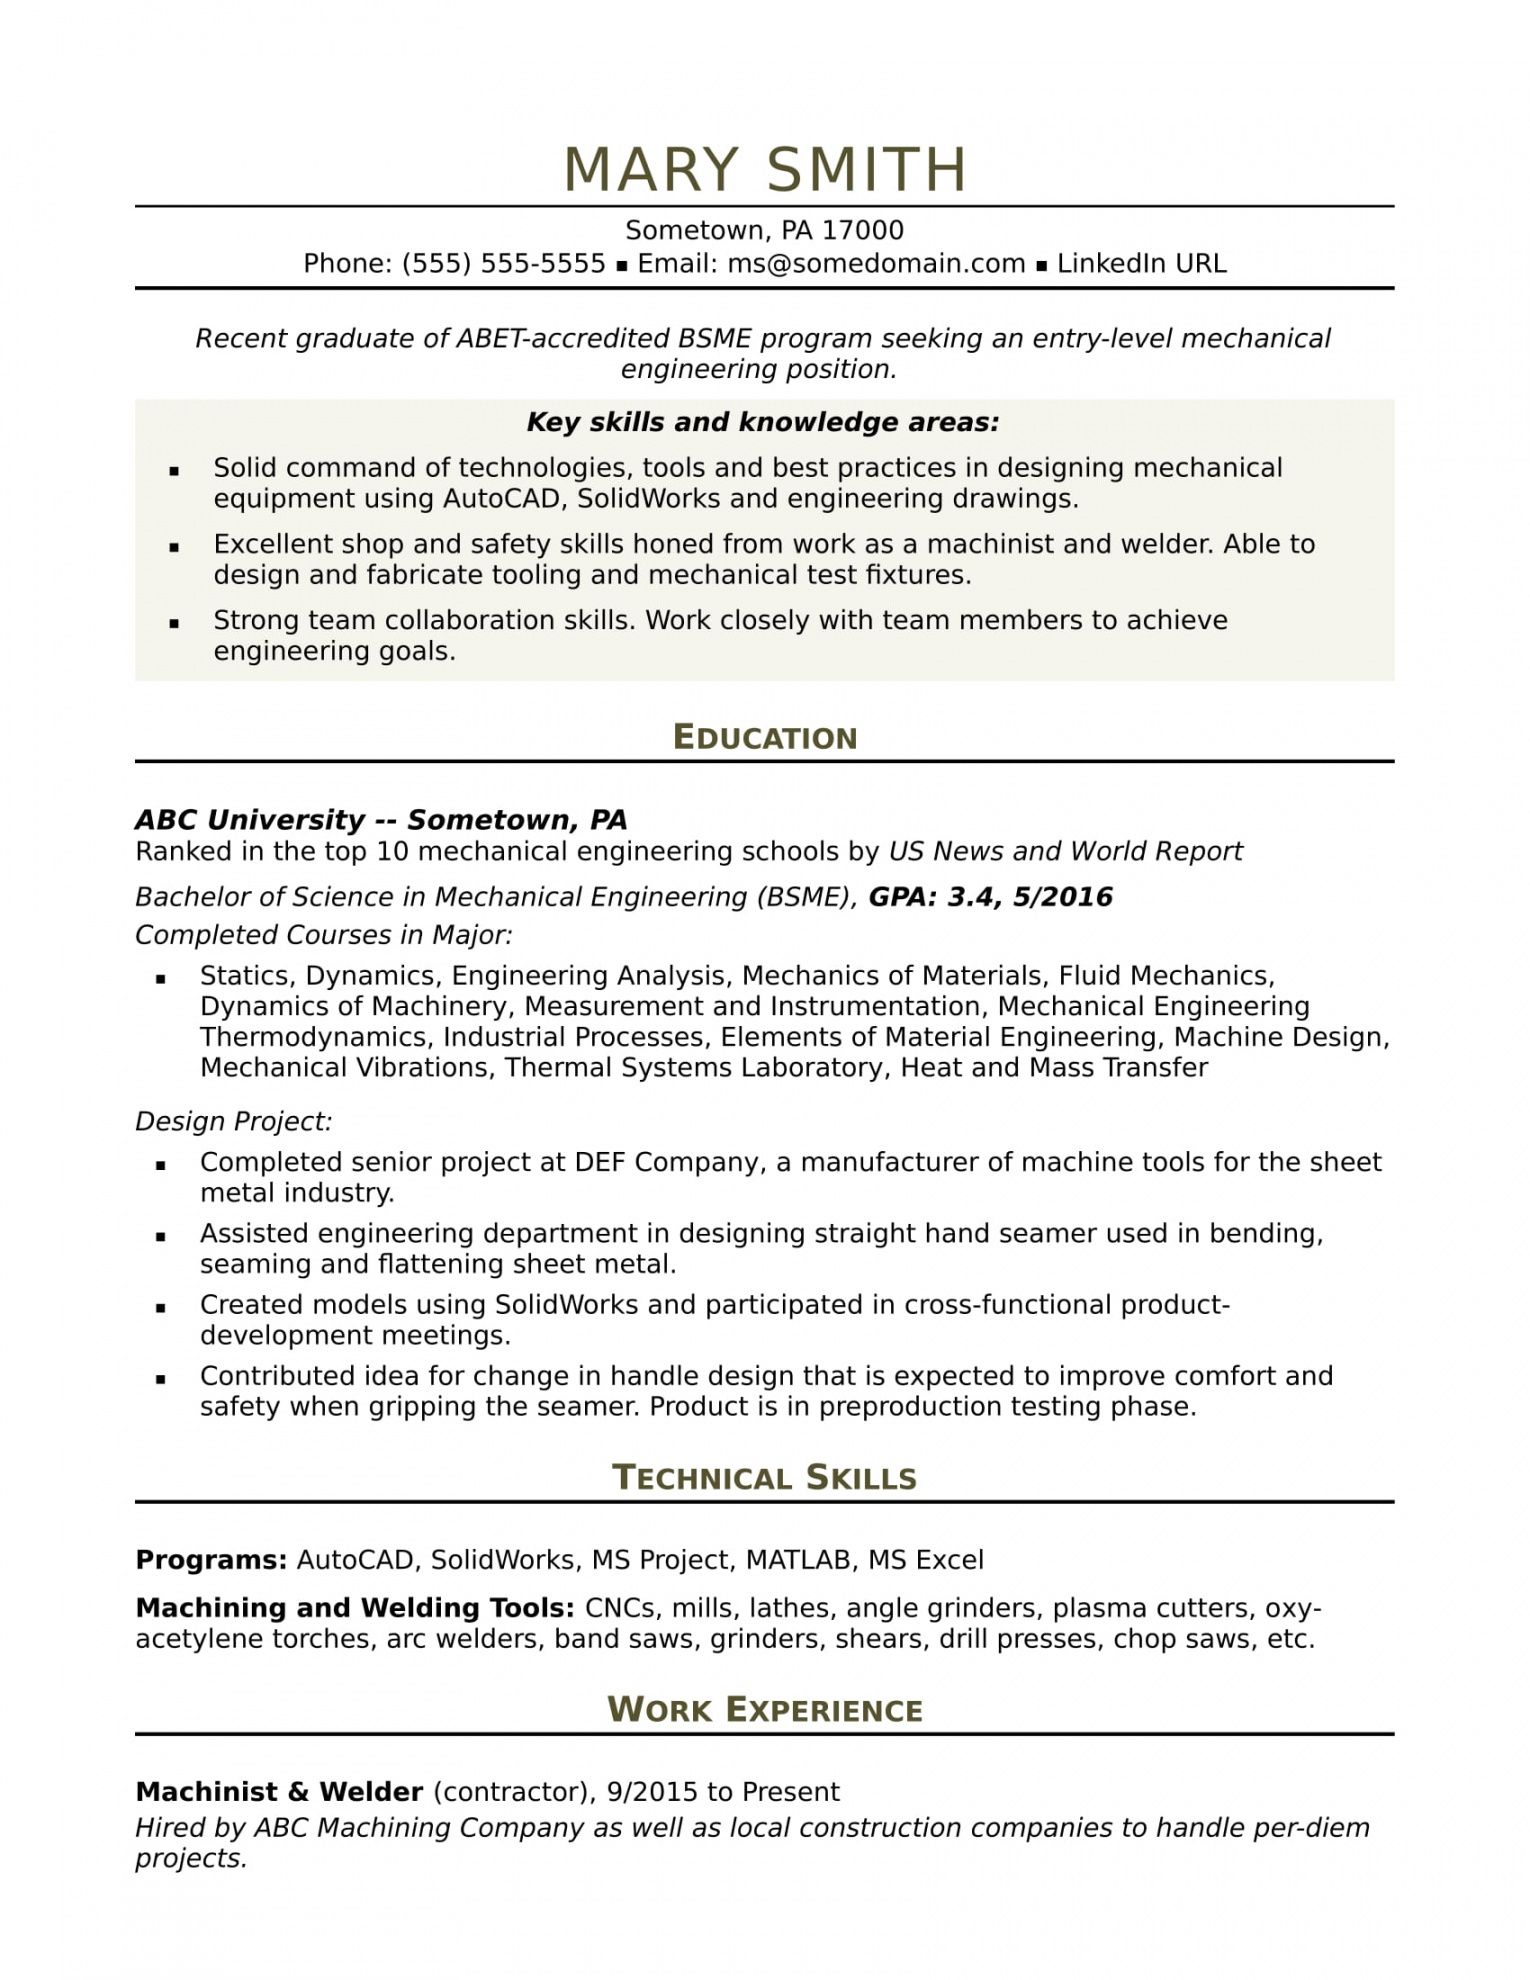 Sample Resume For An Entrylevel Mechanical Engineer Mechanical Engineer